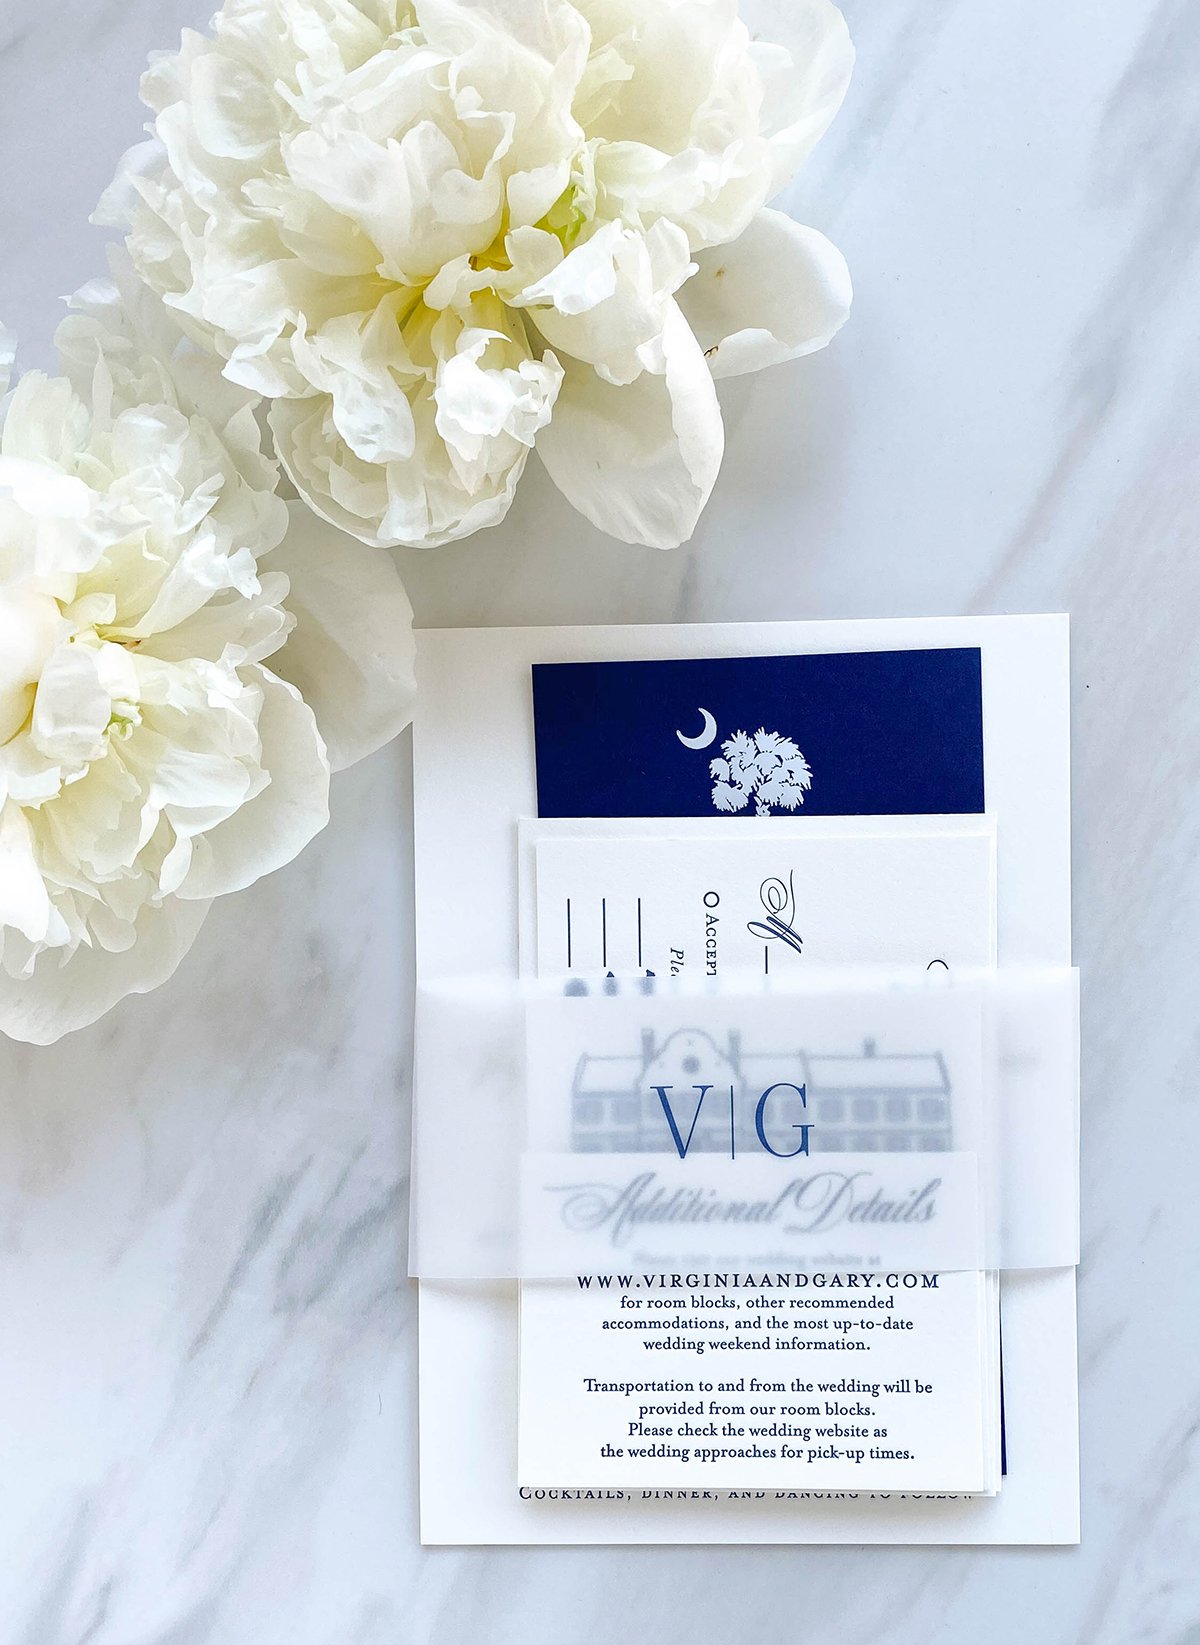 Middleton Place Oak Tree Wedding Invitation by Scotti Cline Designs